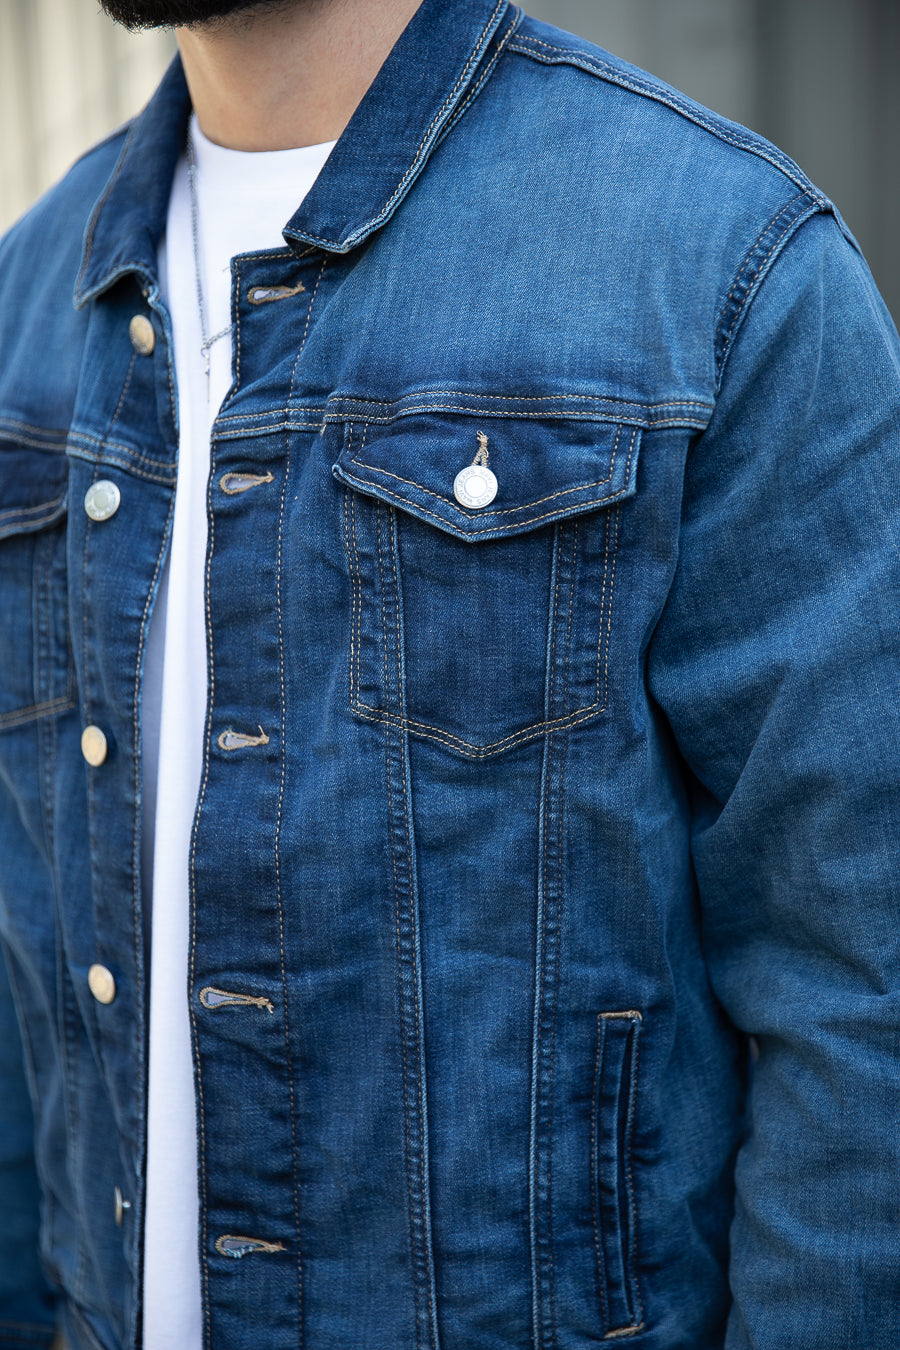 Buy MONTREZ Full Sleeve Men Denim Jacket (Small, Dark Blue) at Amazon.in